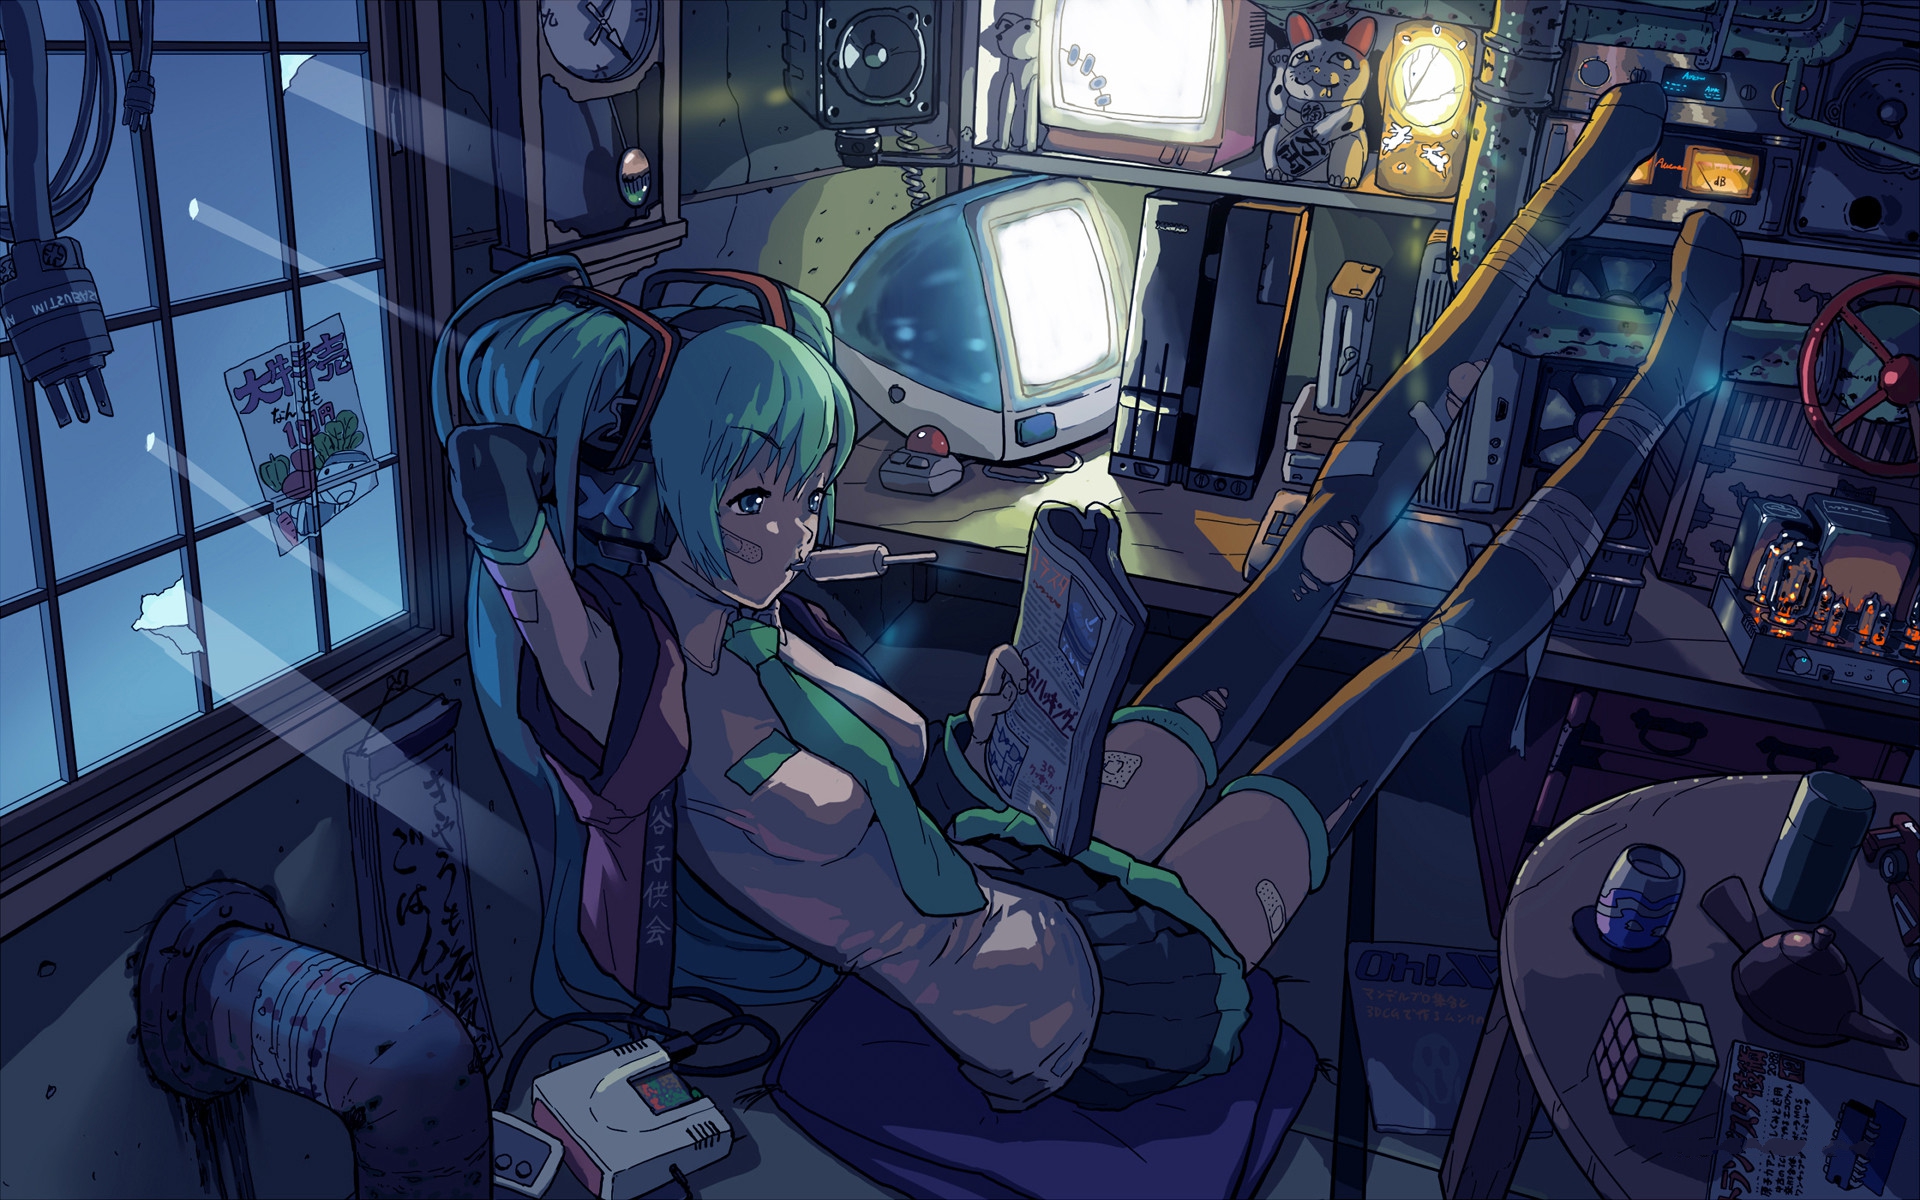 Cyberpunk Anime Girl by Afrial on DeviantArt